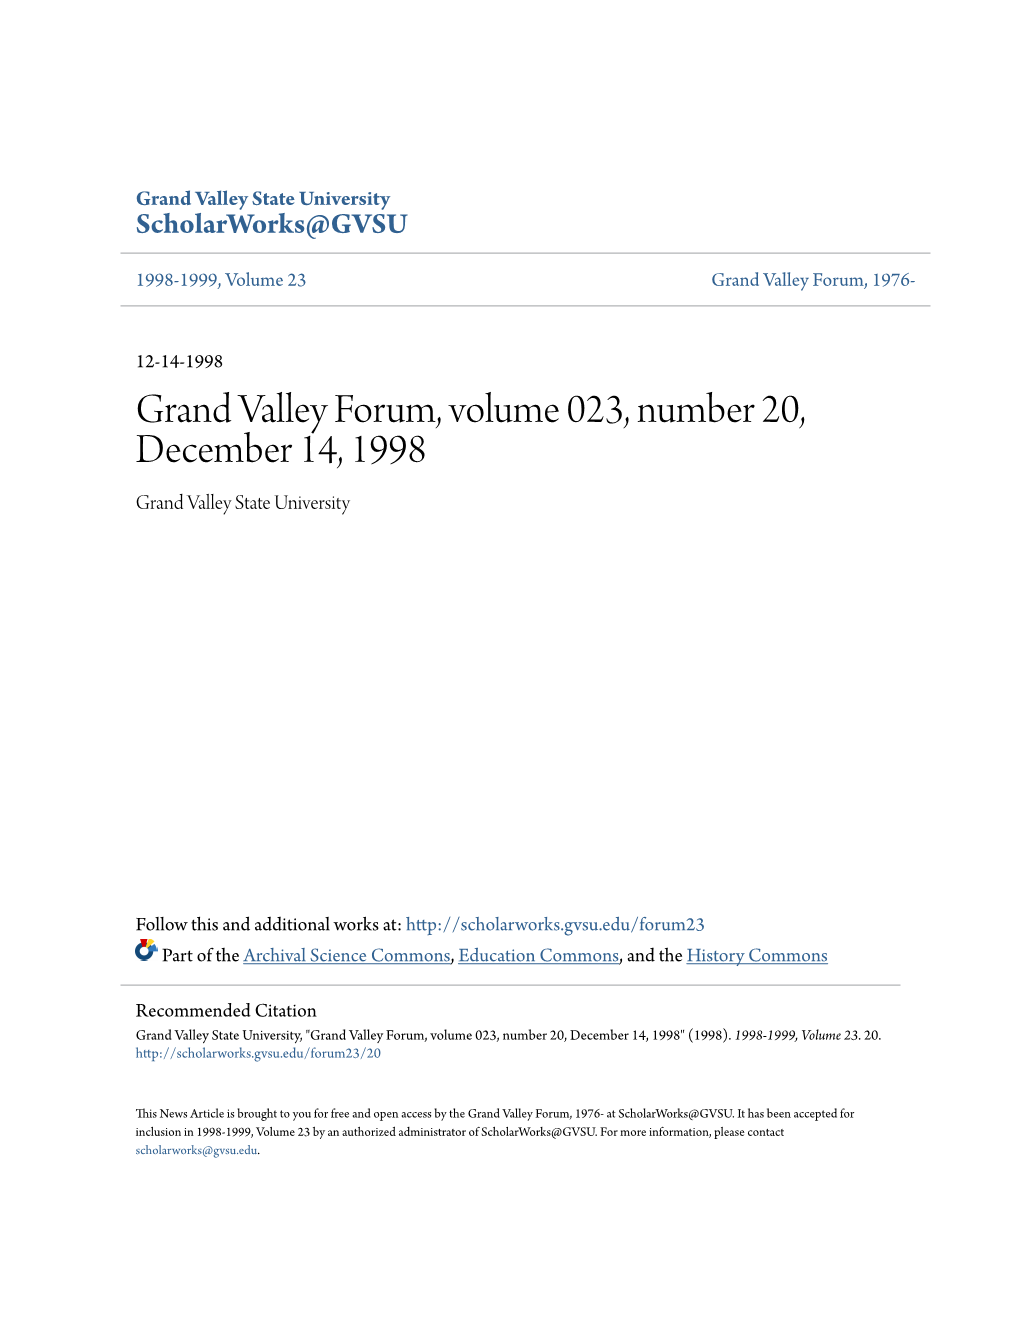 Grand Valley Forum, Volume 023, Number 20, December 14, 1998 Grand Valley State University